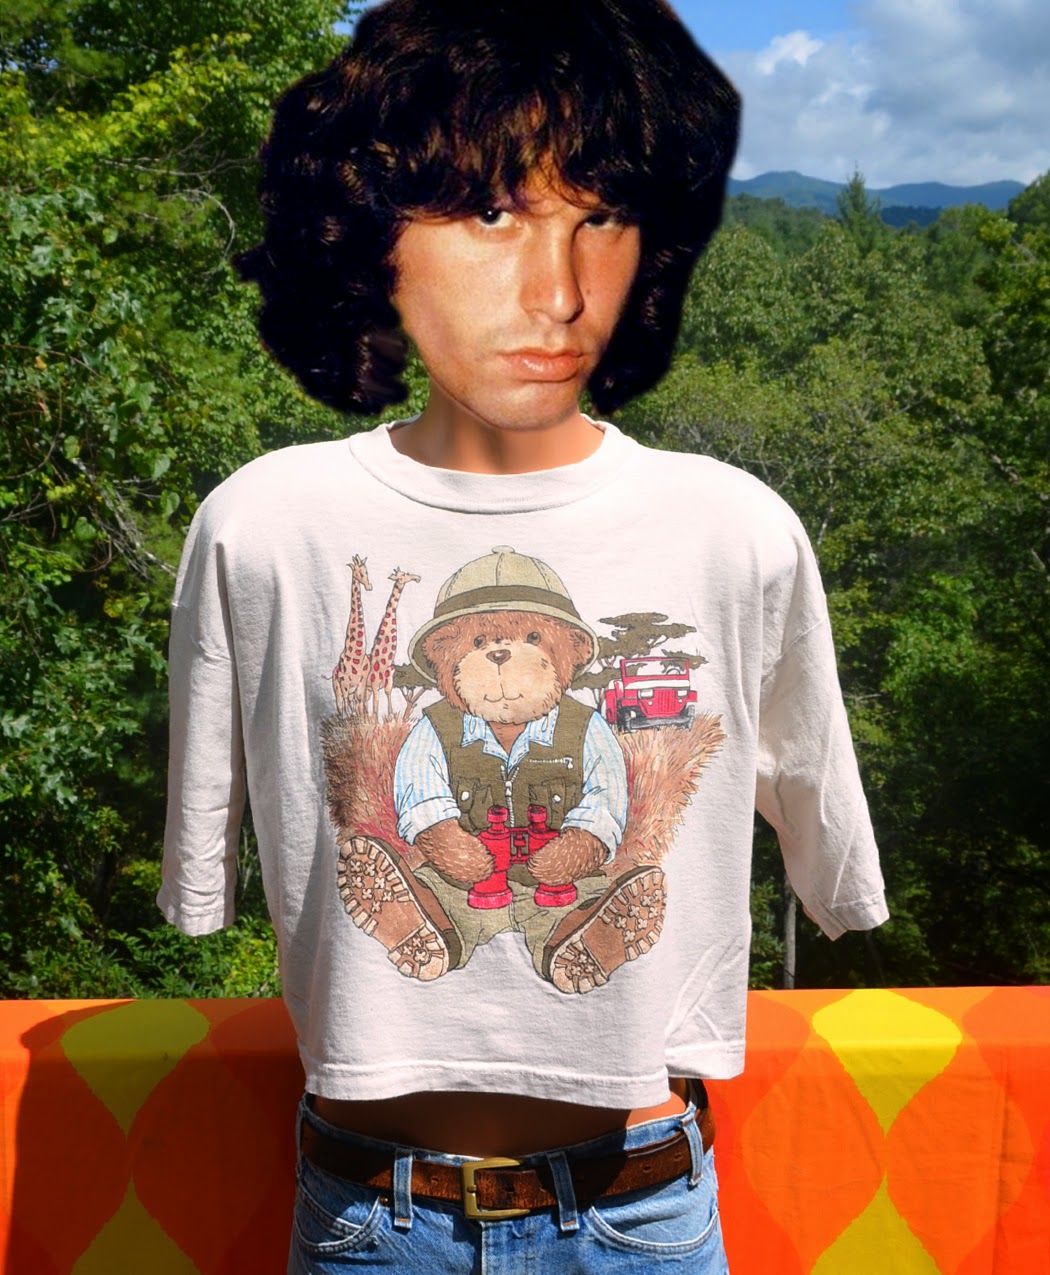 https://www.etsy.com/listing/203745873/80s-vintage-half-t-shirt-safari-teddy